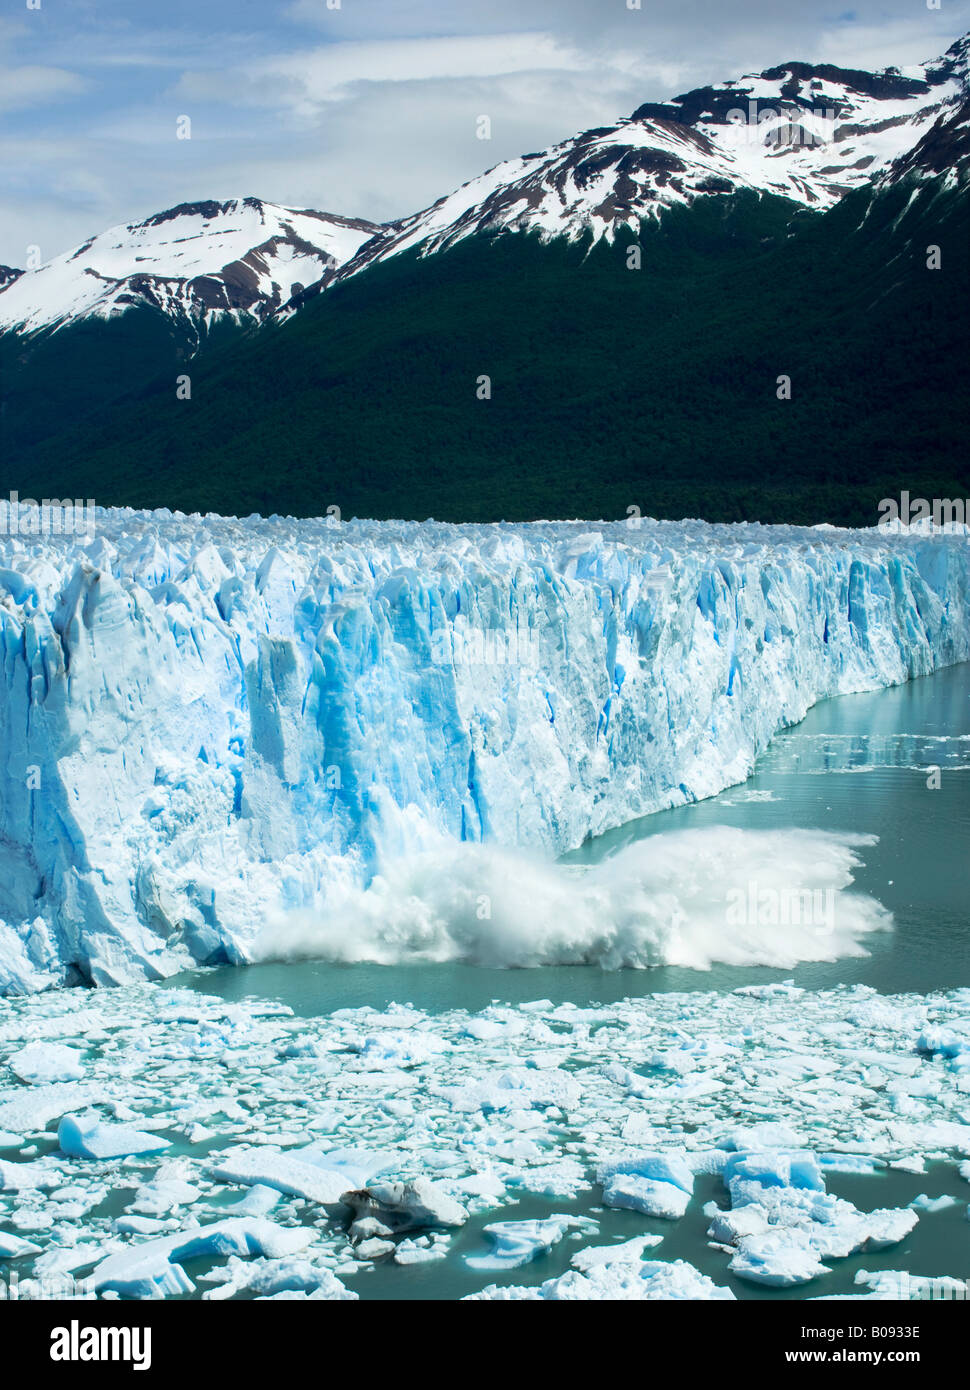 Perito Moreno Glacier calving, Parque Nacional Los Glaciares (Los Glaciares National Park), Patagonia, Argentina, South America Stock Photo